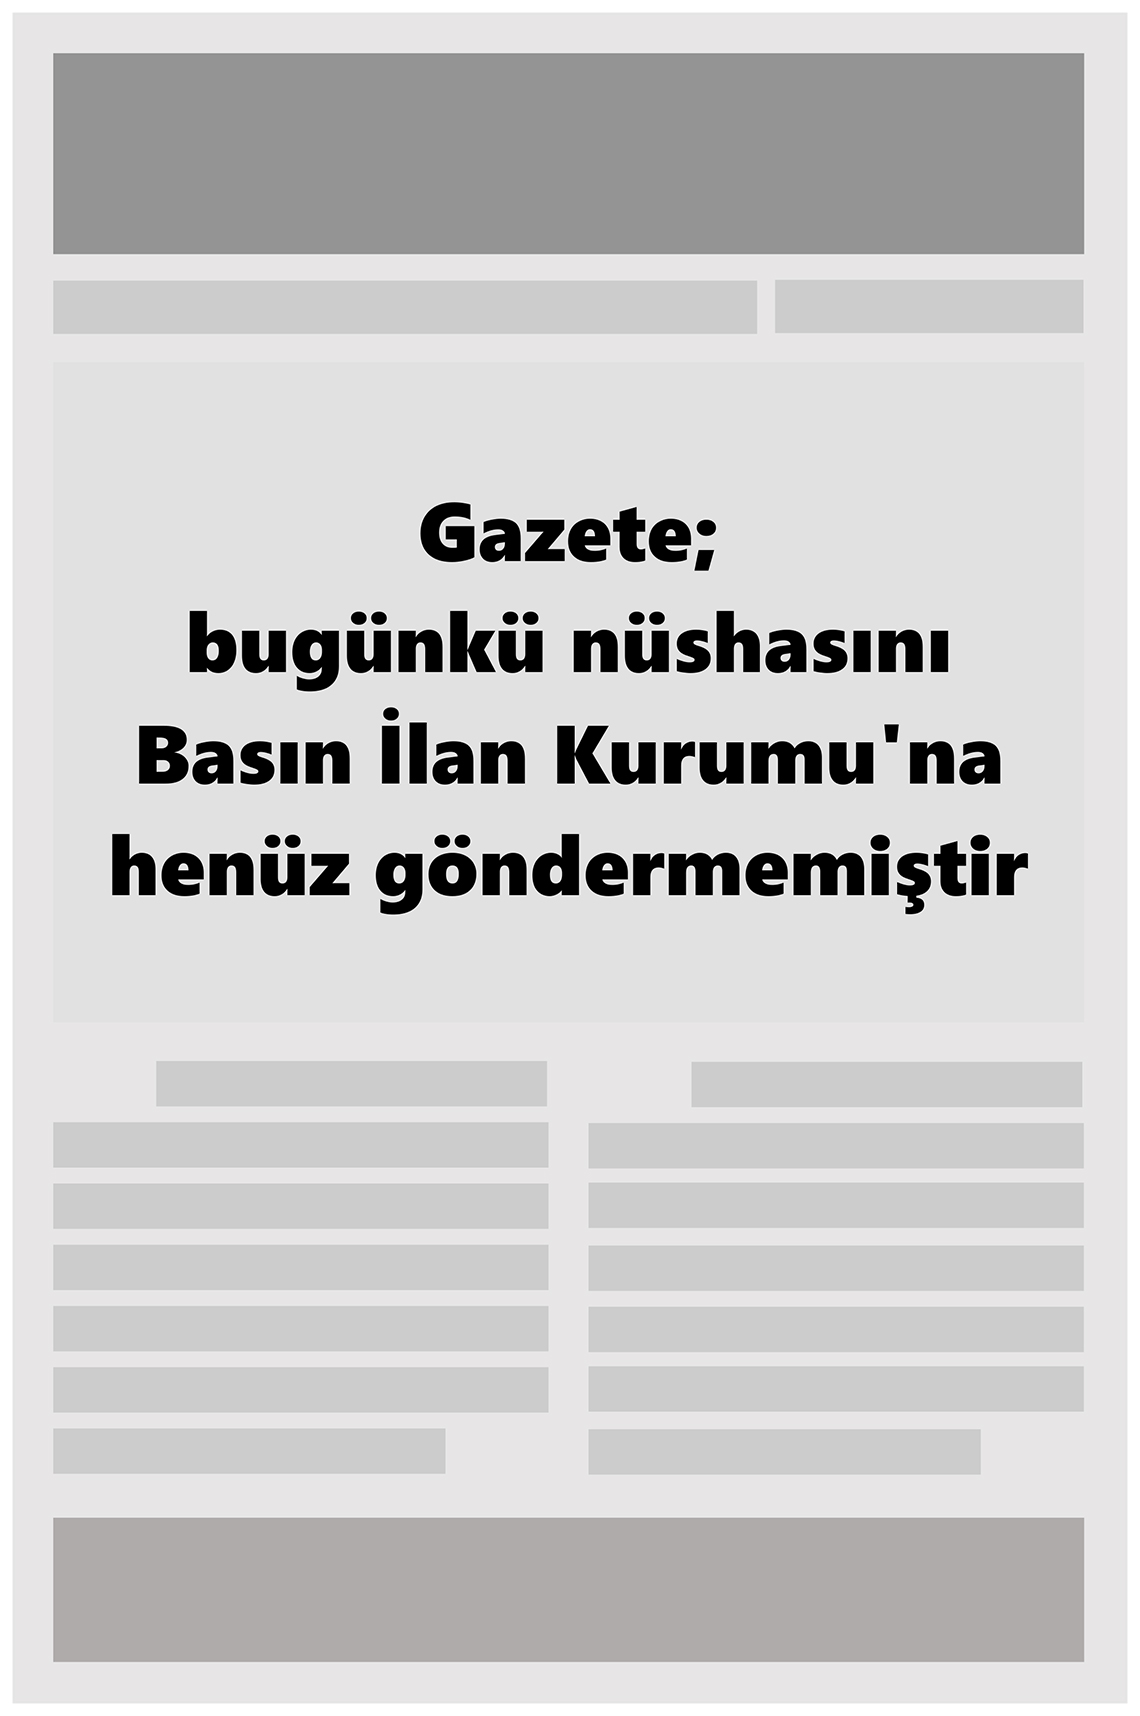 16 Ocak 2022 Gündem 24 Gazete Manşeti